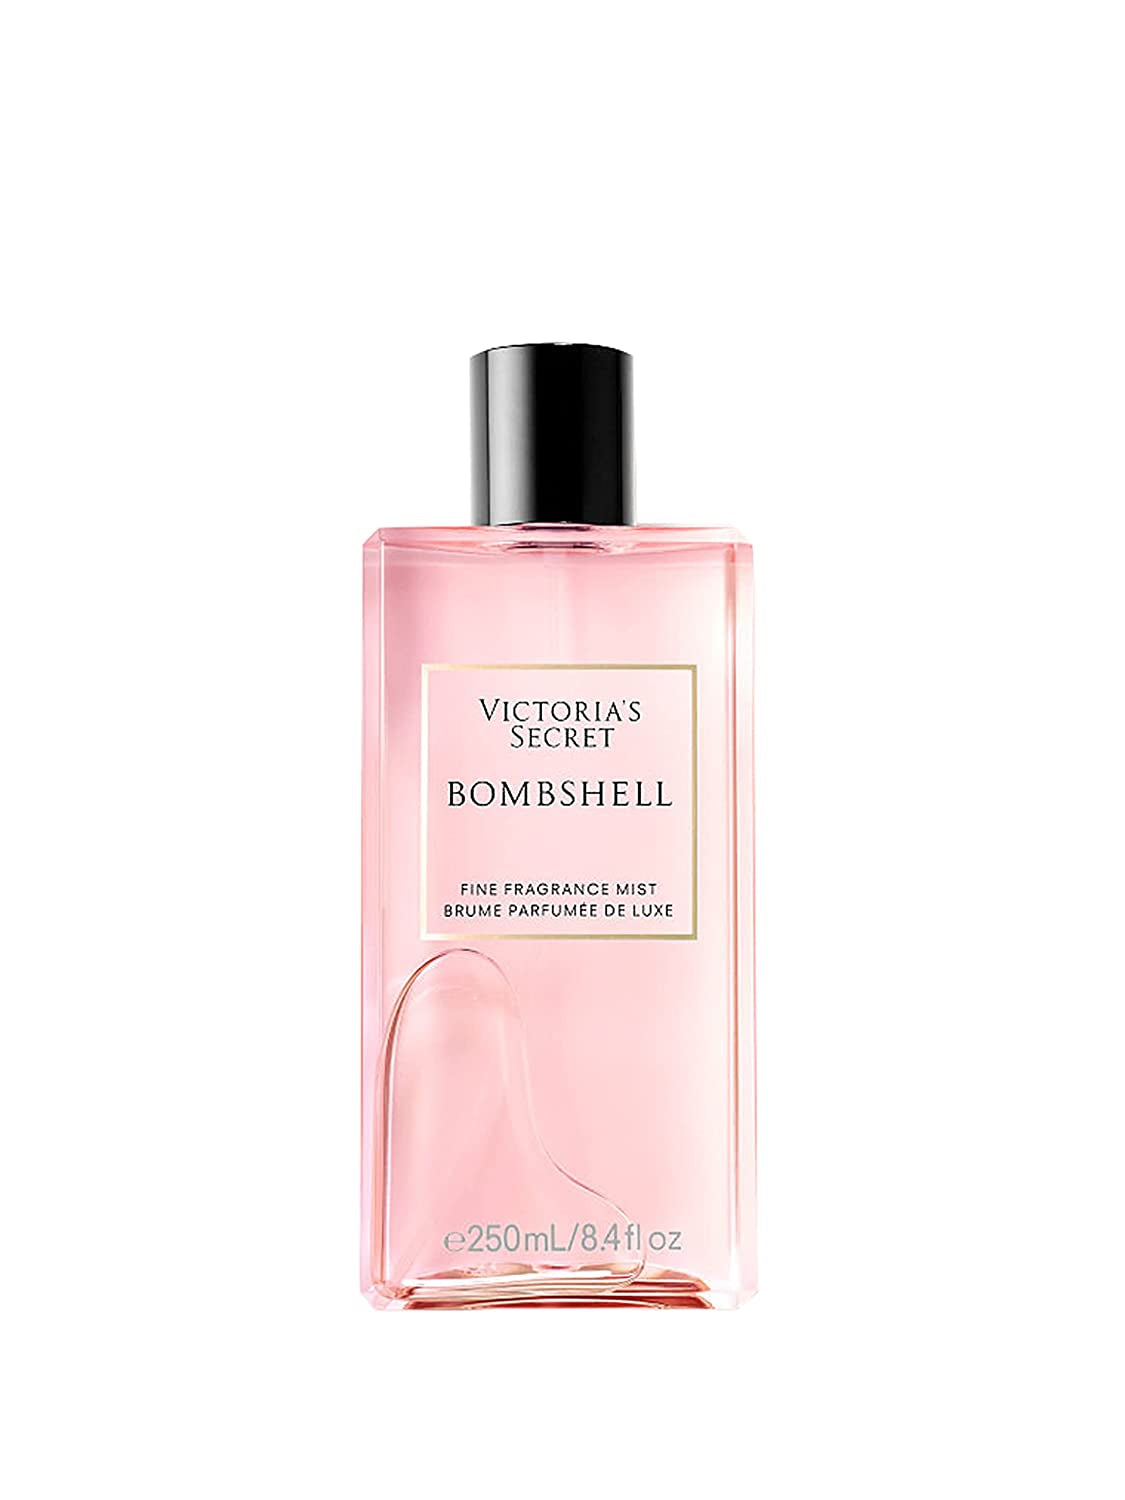 Victoria's Secret Bombshell Fine Fragrance 8.4oz Mist